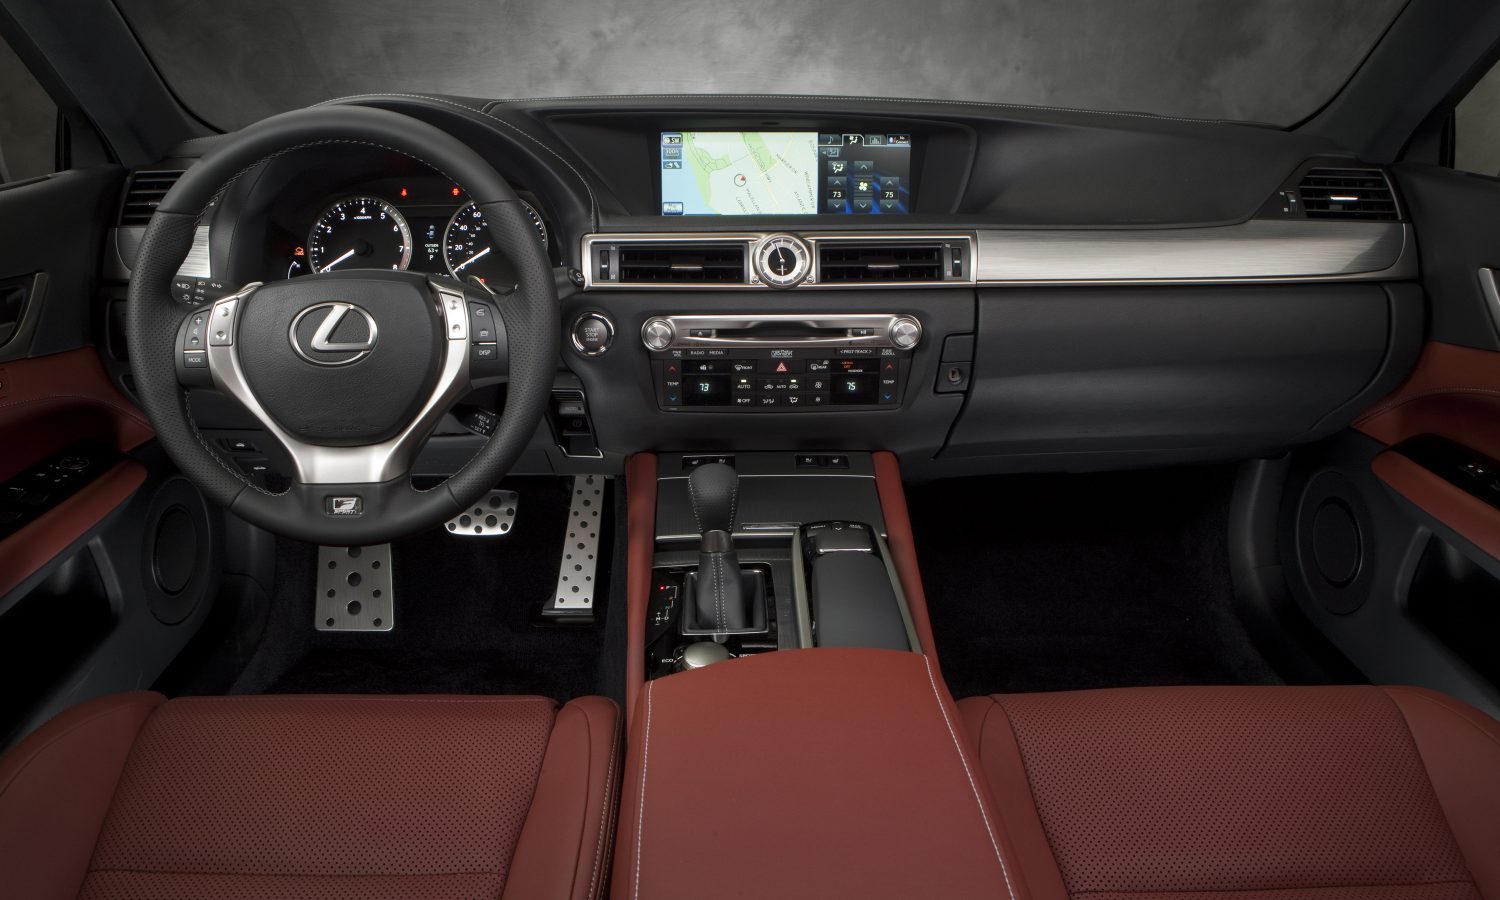 2014 - 2015 Lexus GS 350 F SPORT 015 - Lexus USA Newsroom